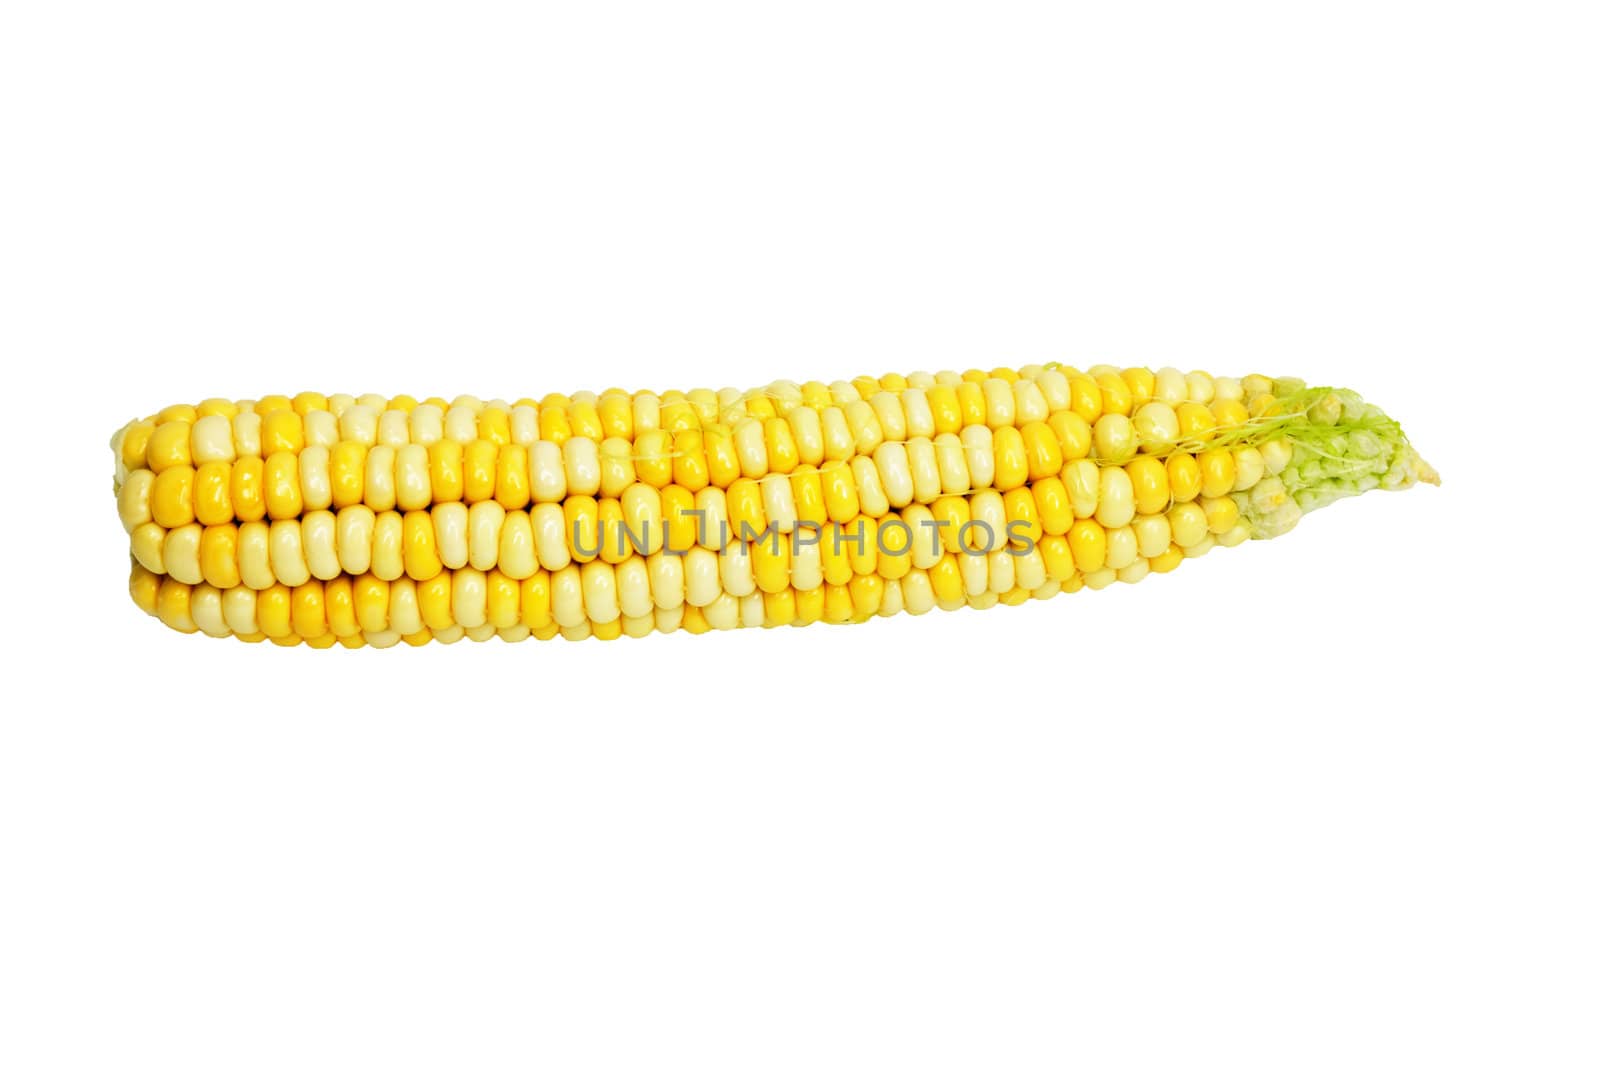 Corn isolated on white background  by schankz